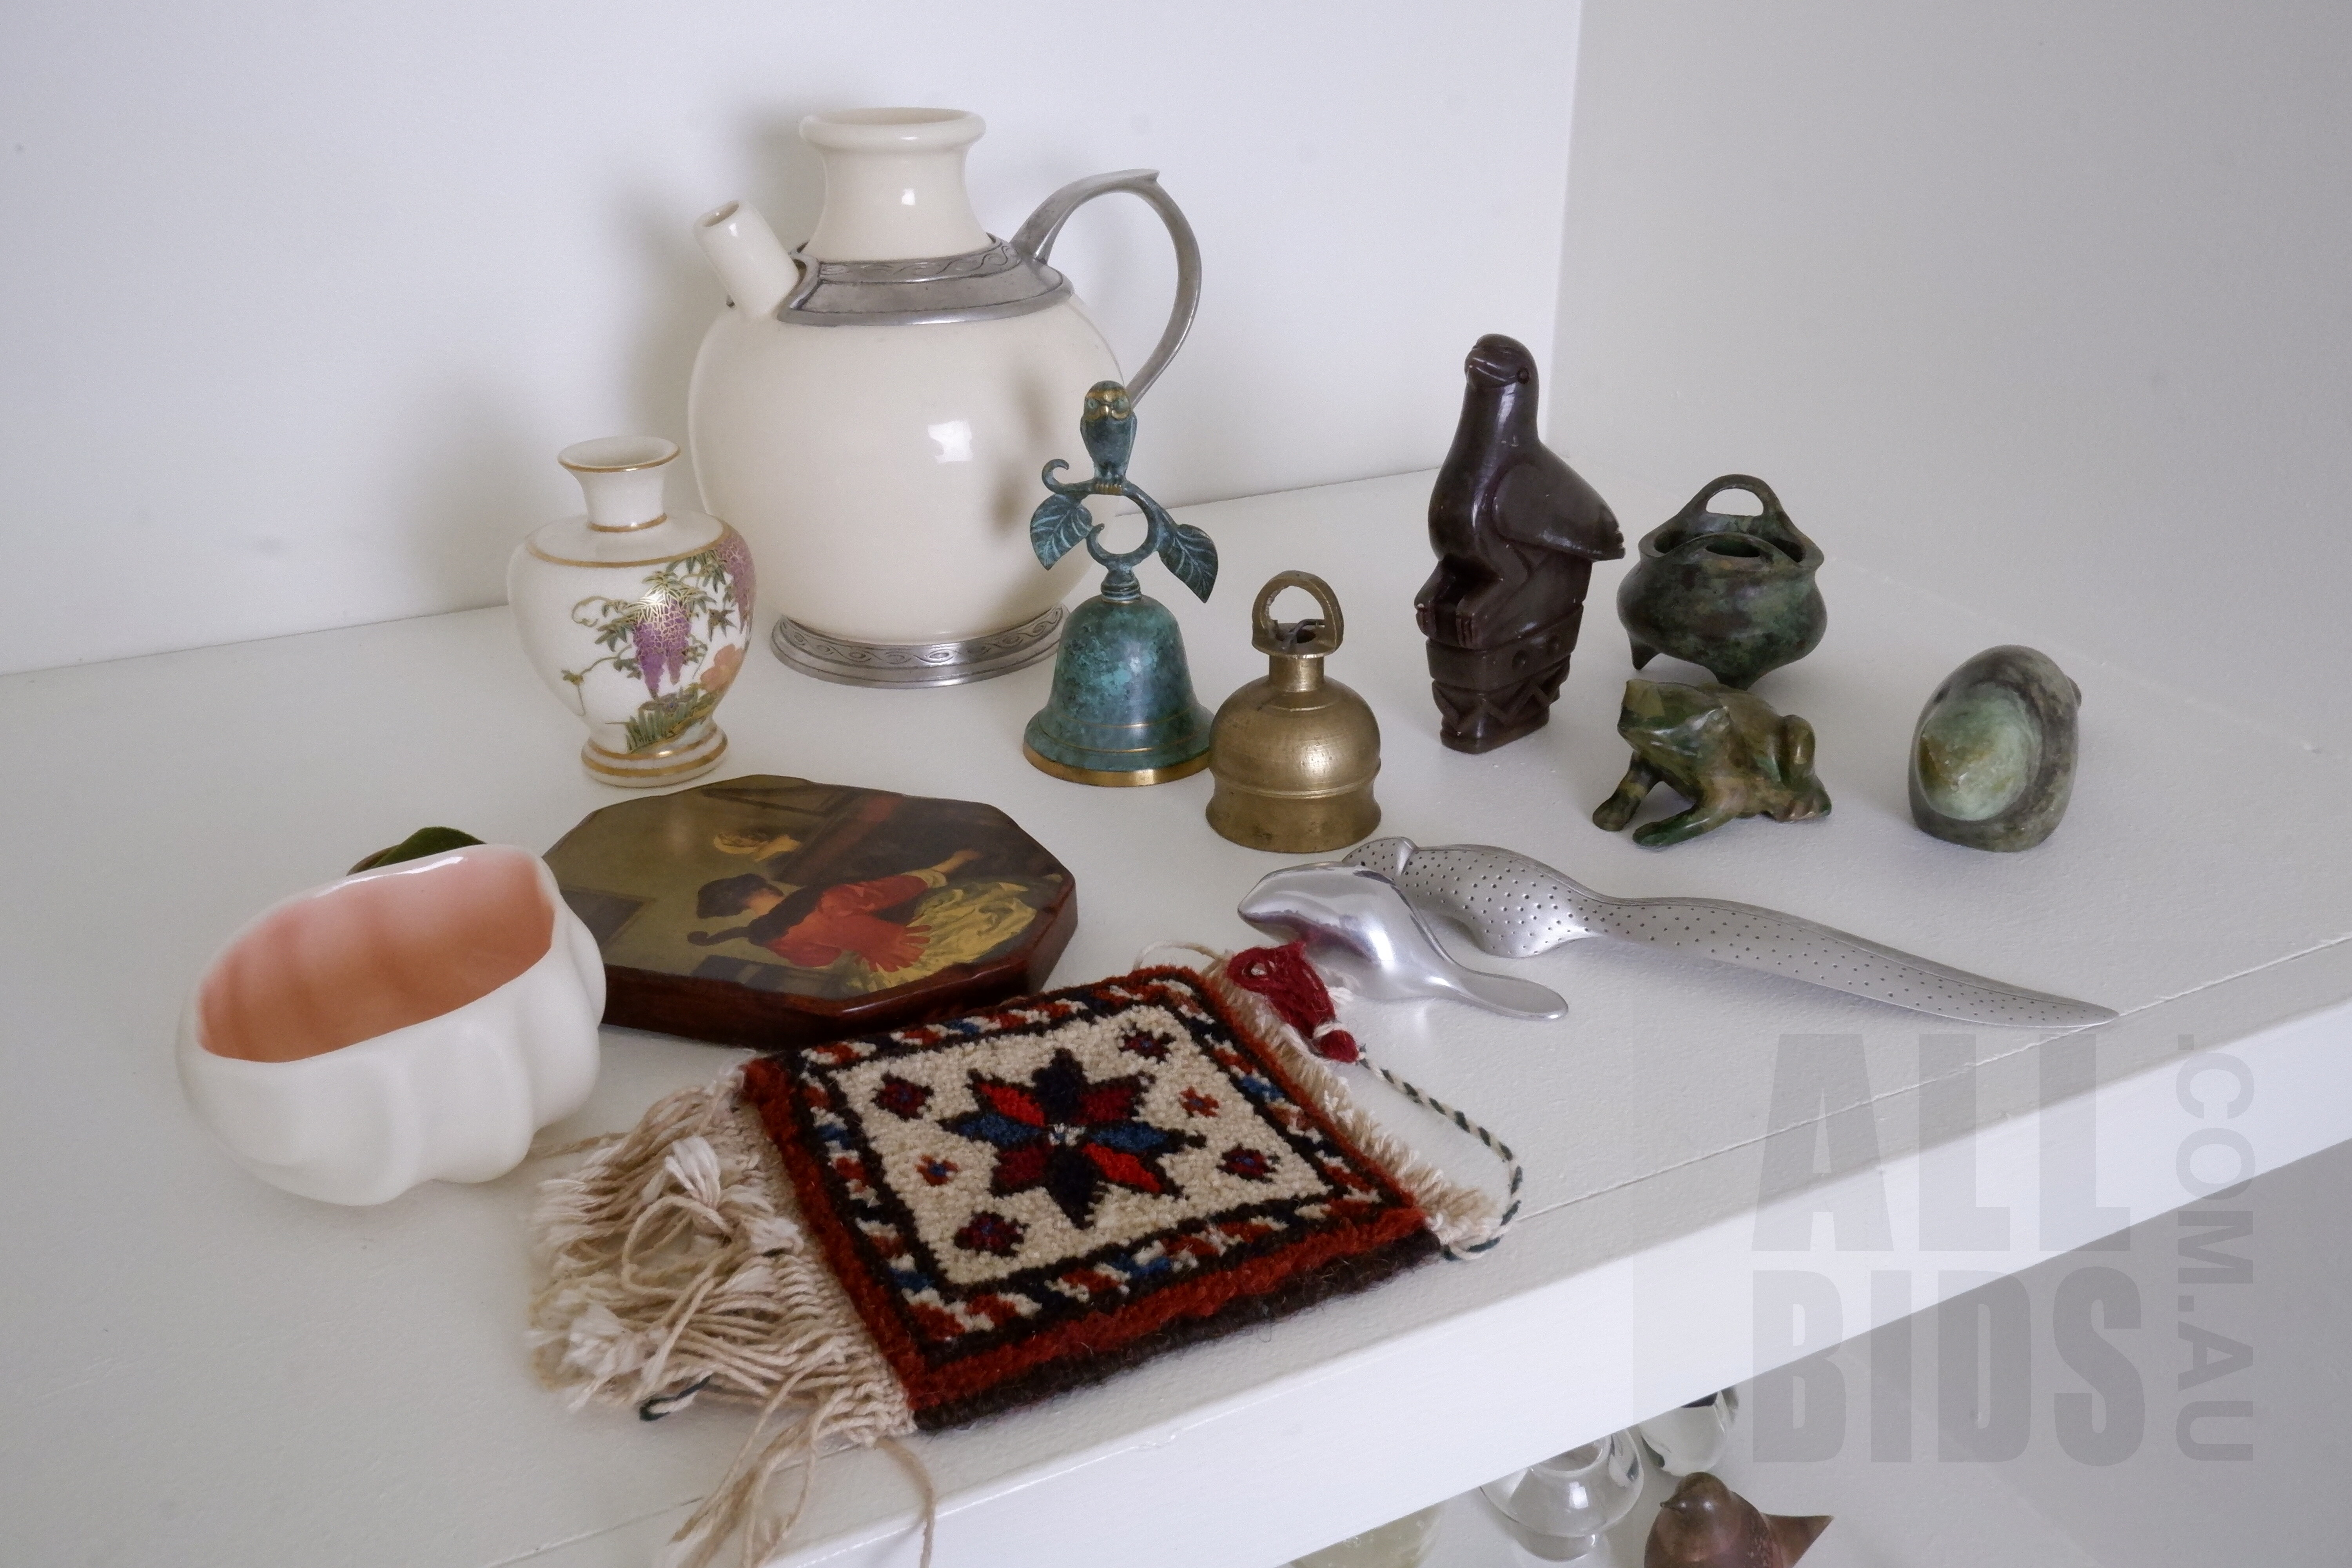 'Miniature Satsuma Vase, Inuit Soapstone Carvings, Peter Diepenbrock Pewter Page Turner, Scottish Ceramic Jug and More'